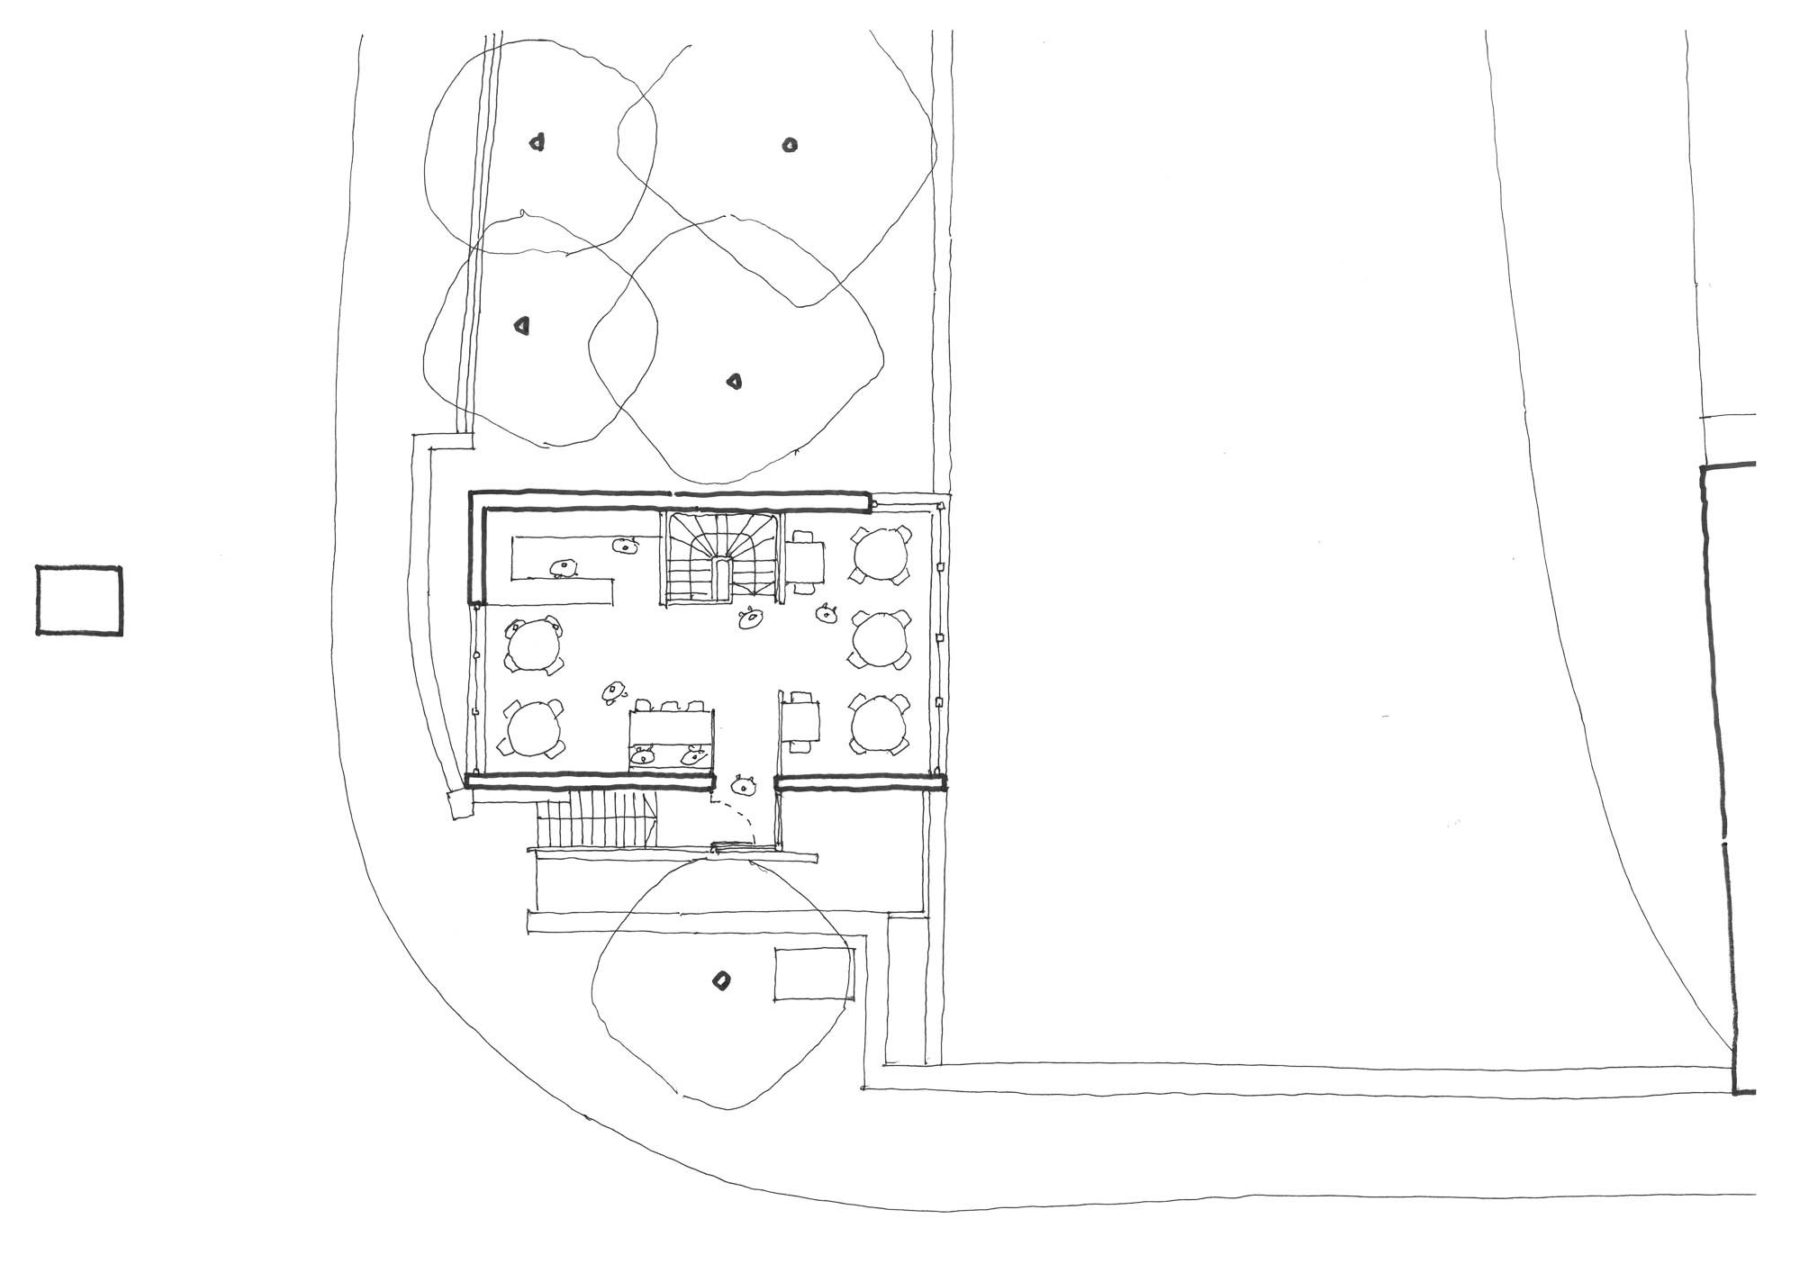 181221 first floor plan